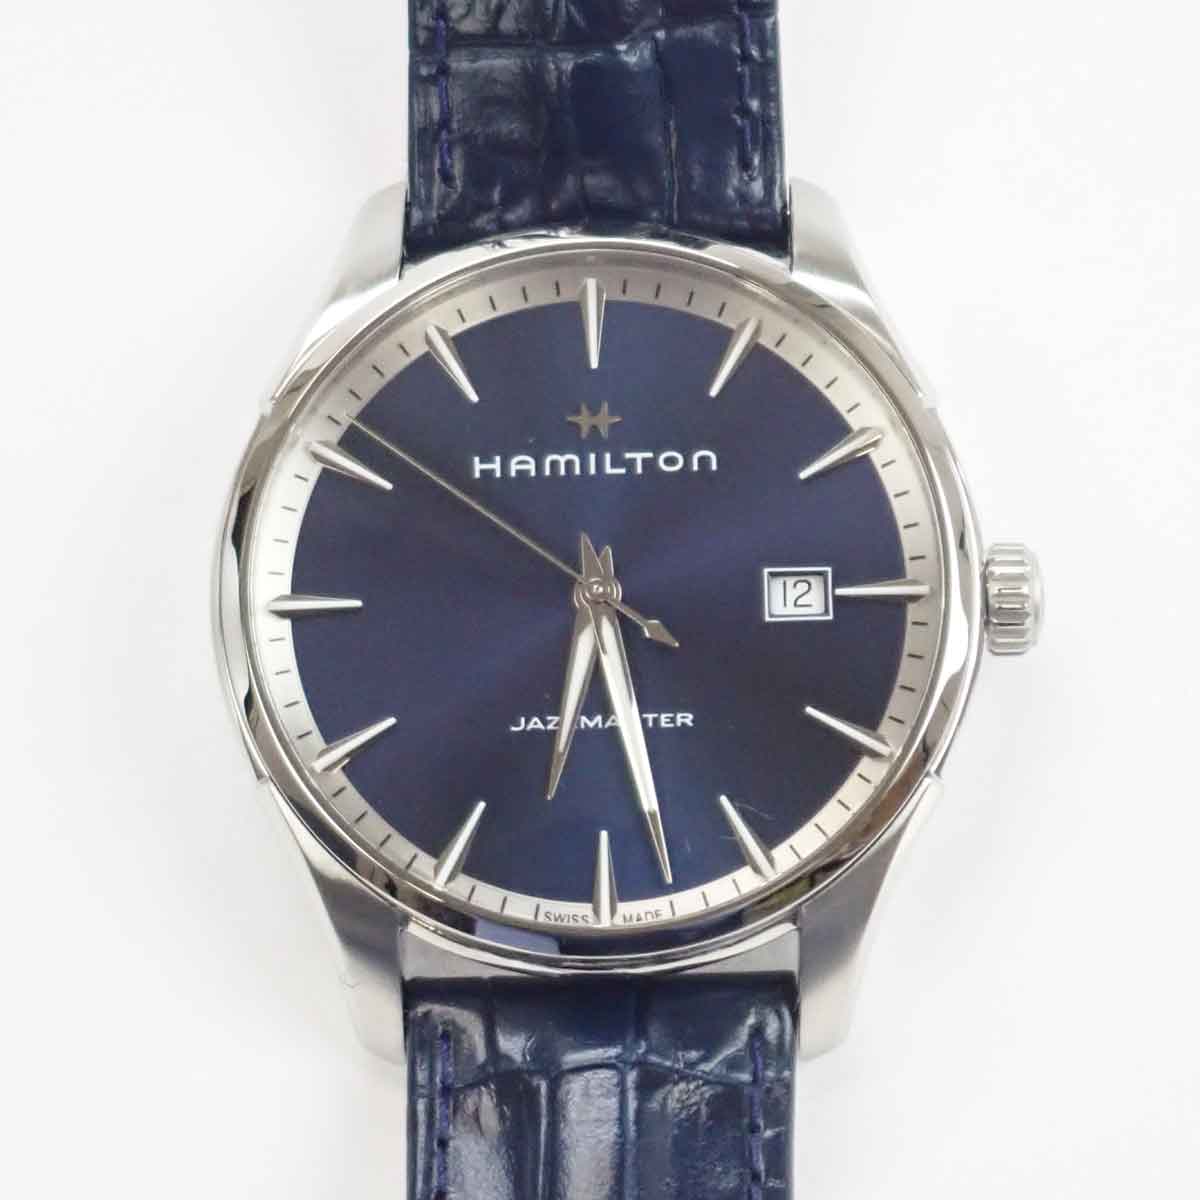 HAMILTON Jazzmaster Gent Men's Wristwatch, Stainless Steel/Calf Leather, HAMILTON Preloved H32451641